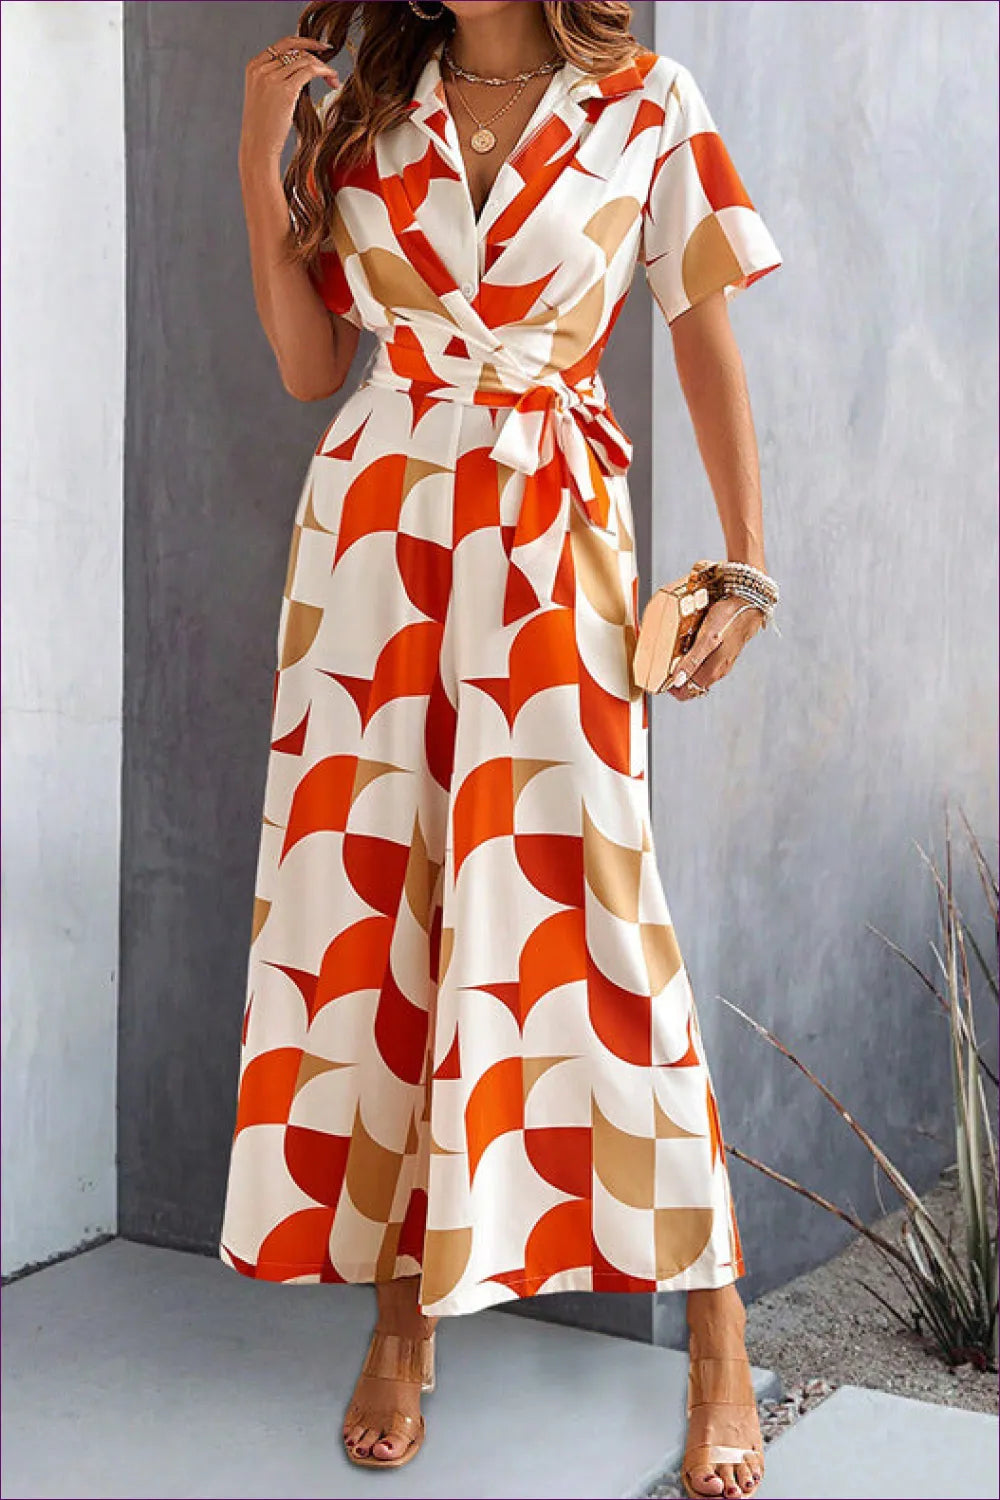 Geometric Print Wrap Dress - Effortless Chic For x